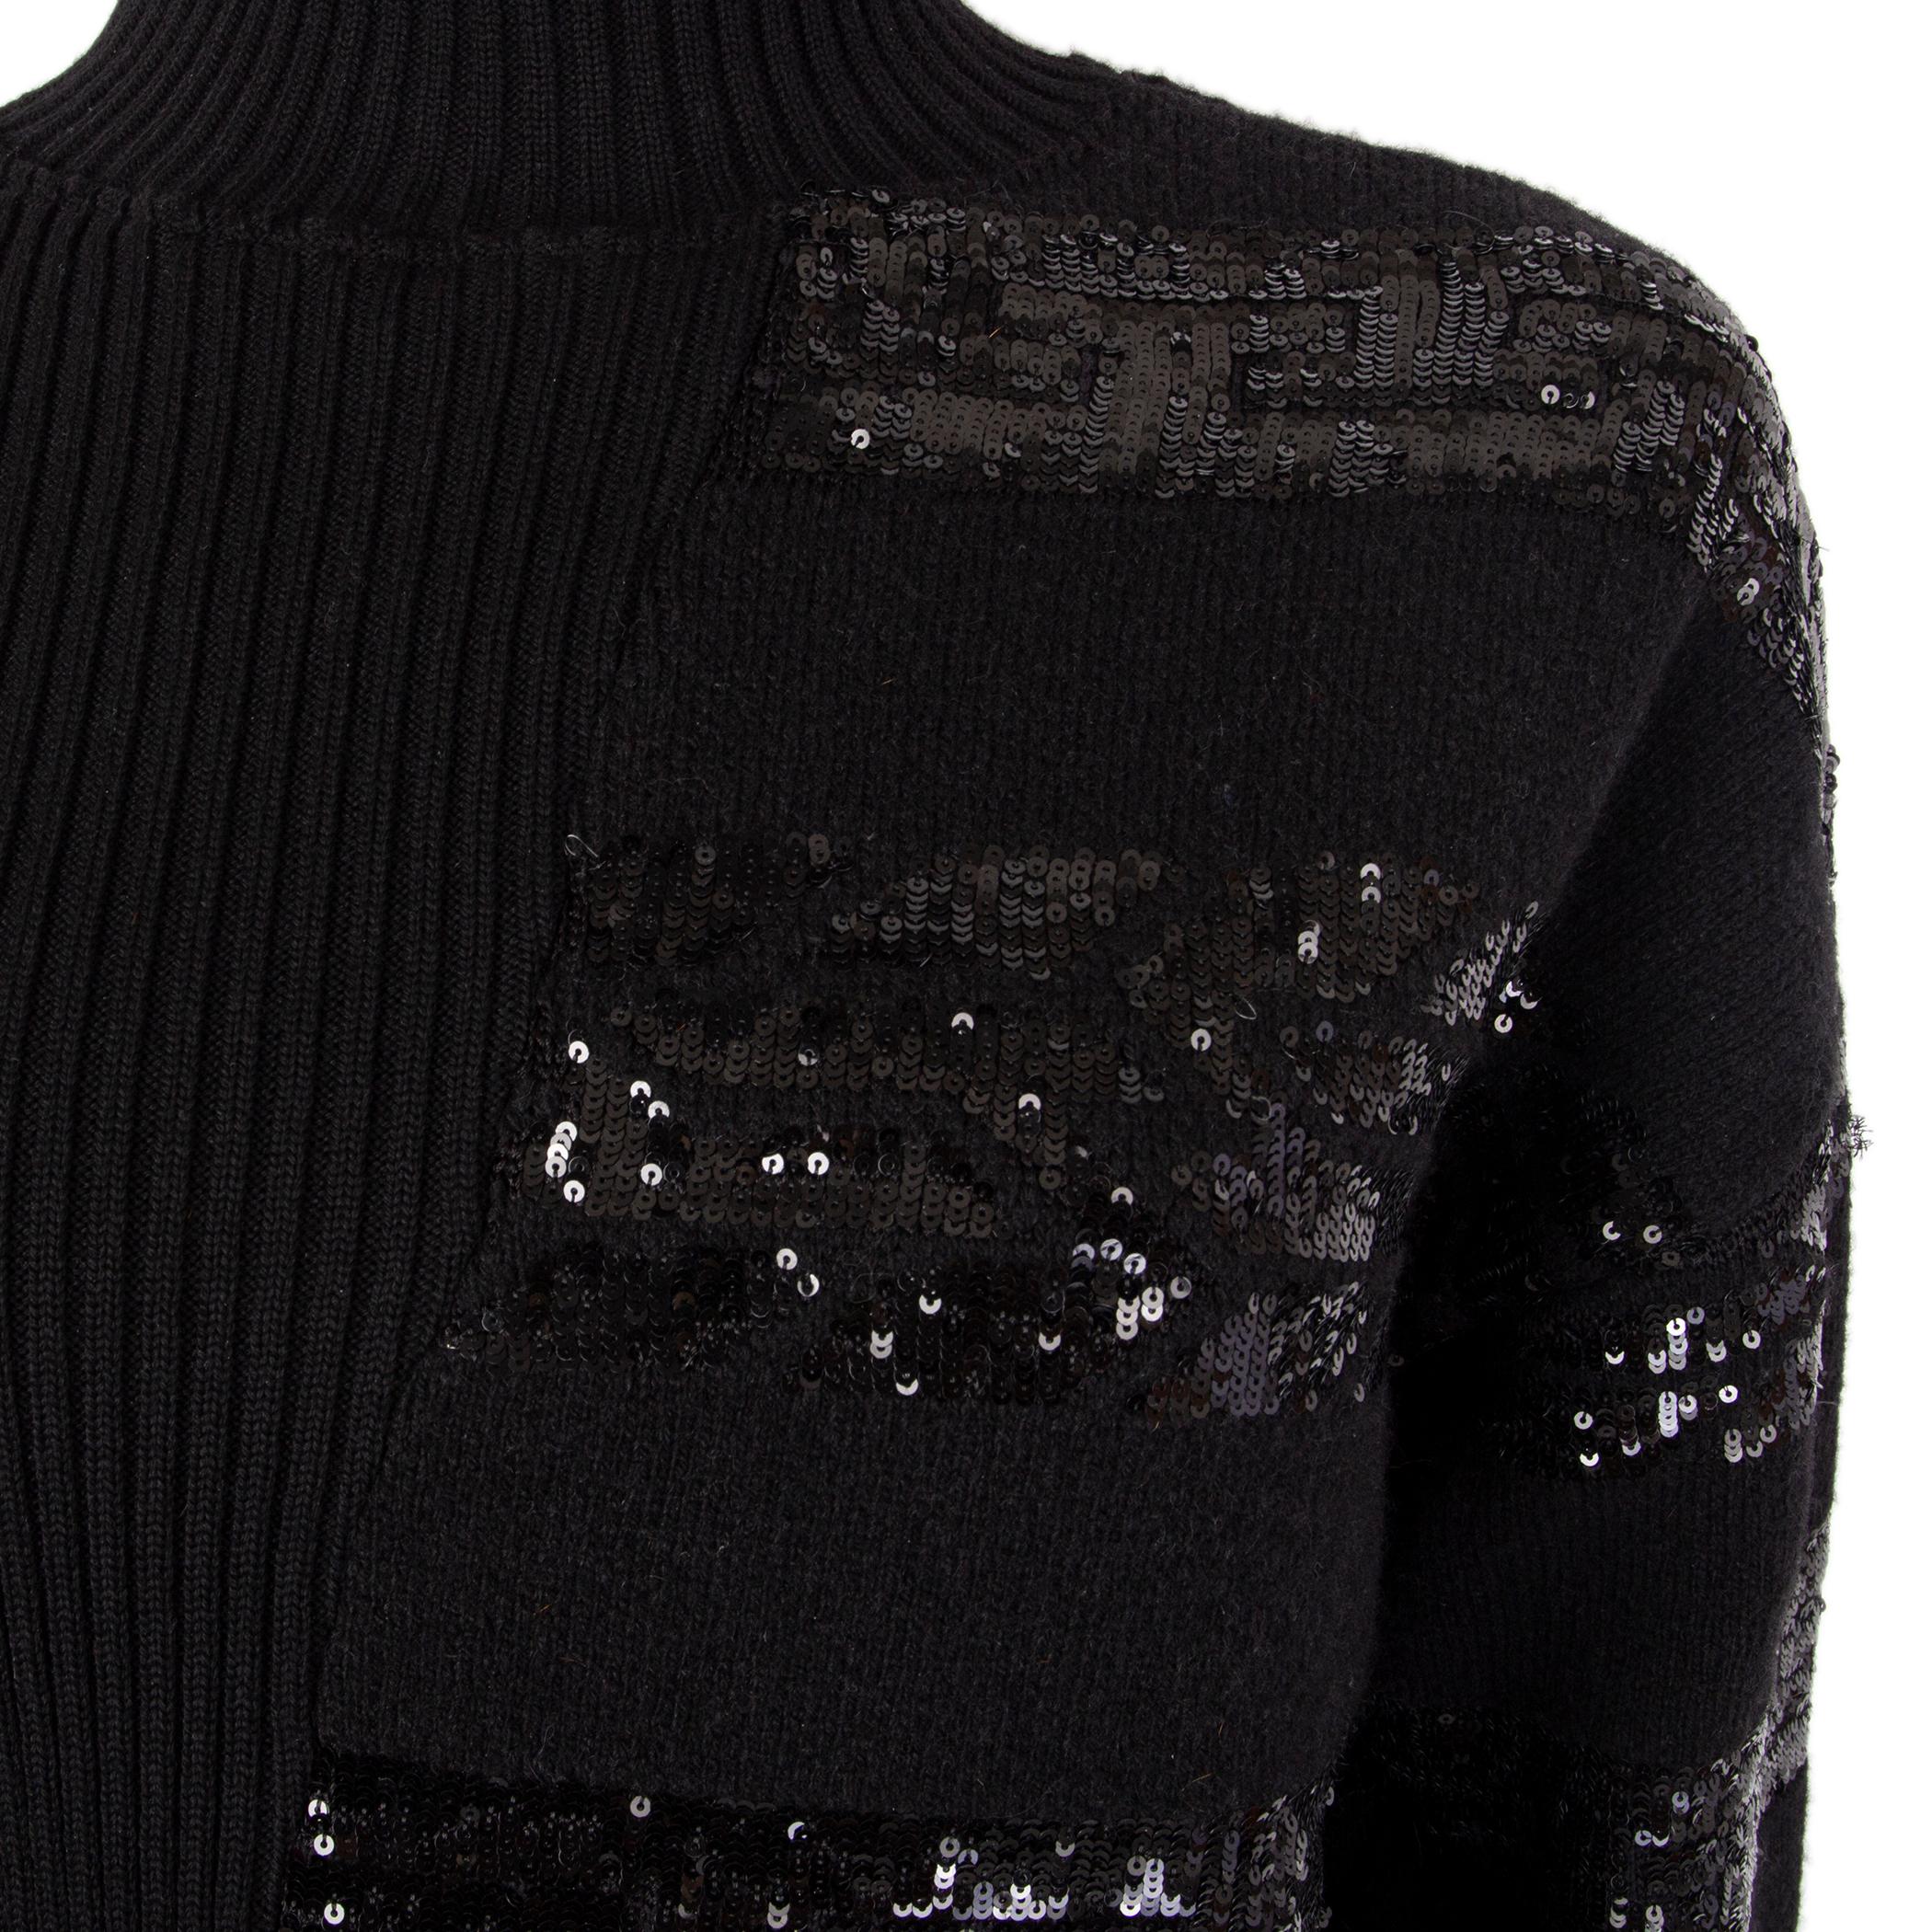 Black LOUIS VUITTON black wool SEQUIN EMBELLISHED Sweater Cocktail Dress M